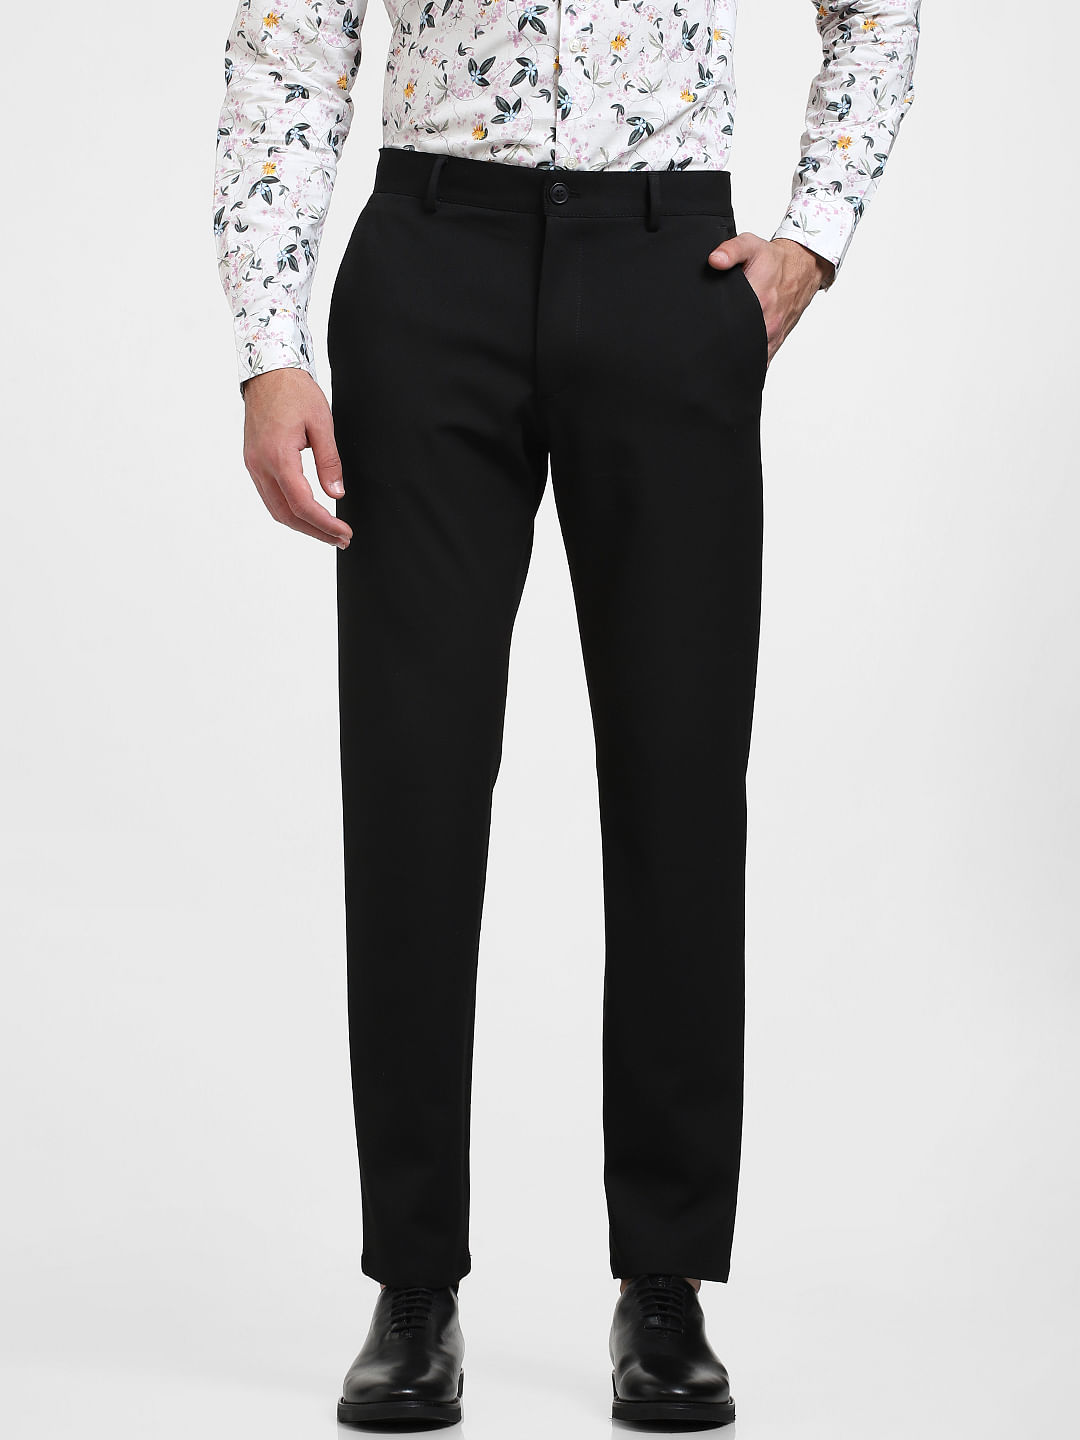 Buy Men Black Check Slim Fit Formal Trousers Online - 701940 | Peter England